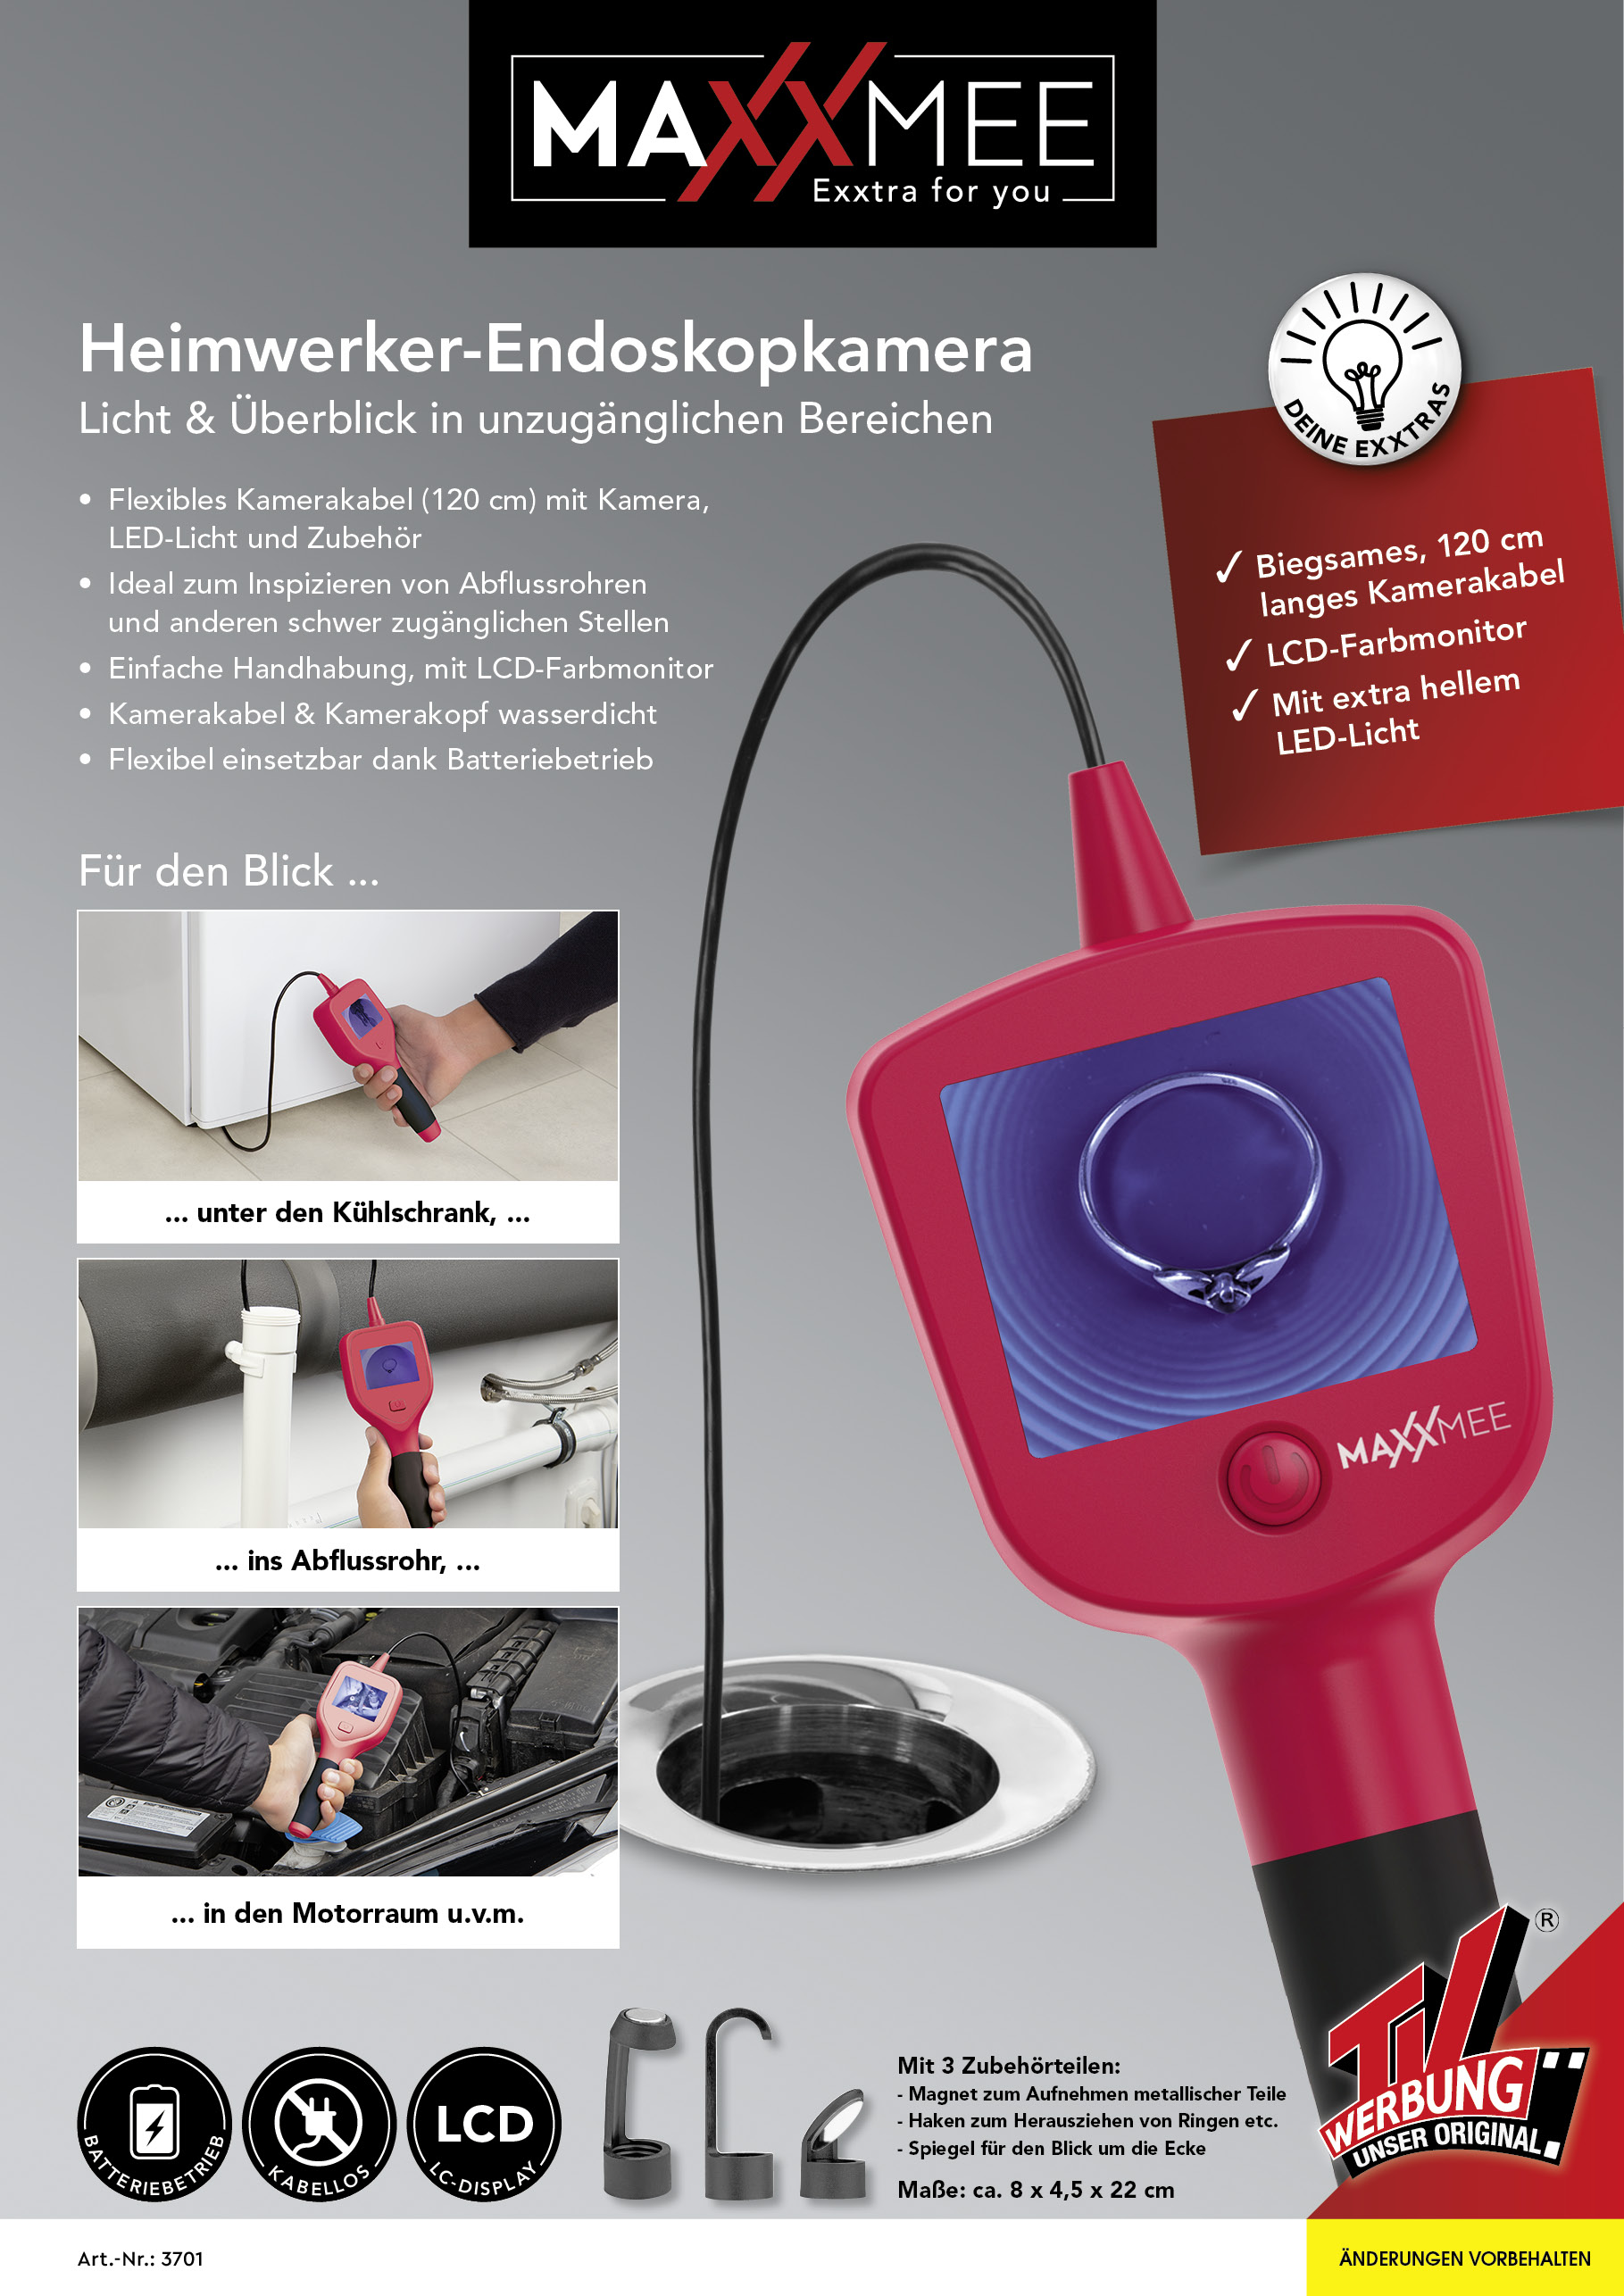 48226 - MAXXMEE do-it-yourself endoscope camera 4 pcs. Europe